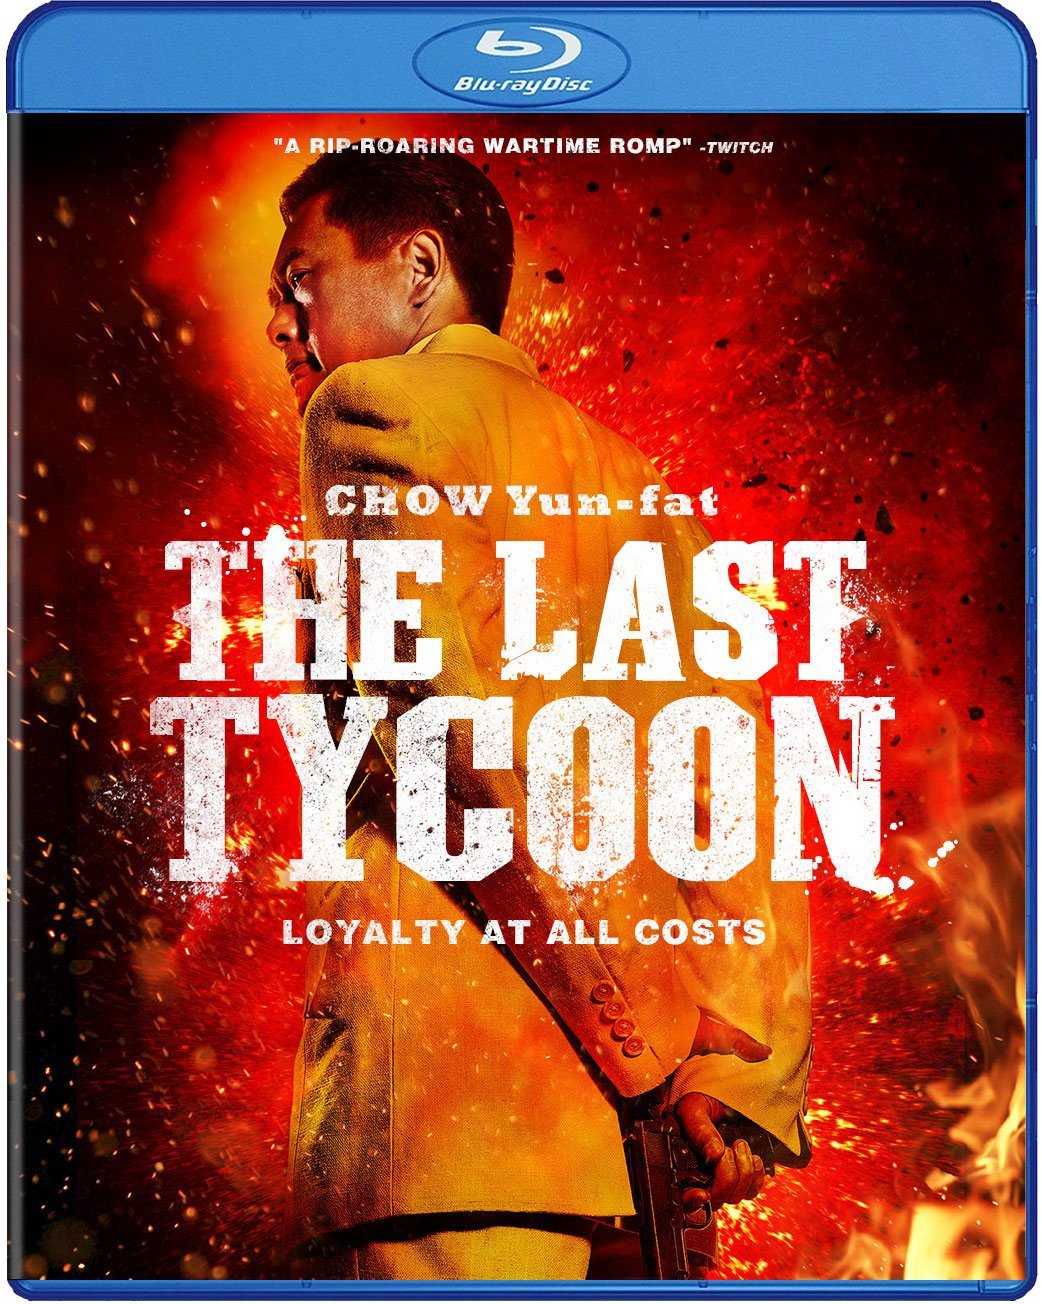 Last Tycoon, The